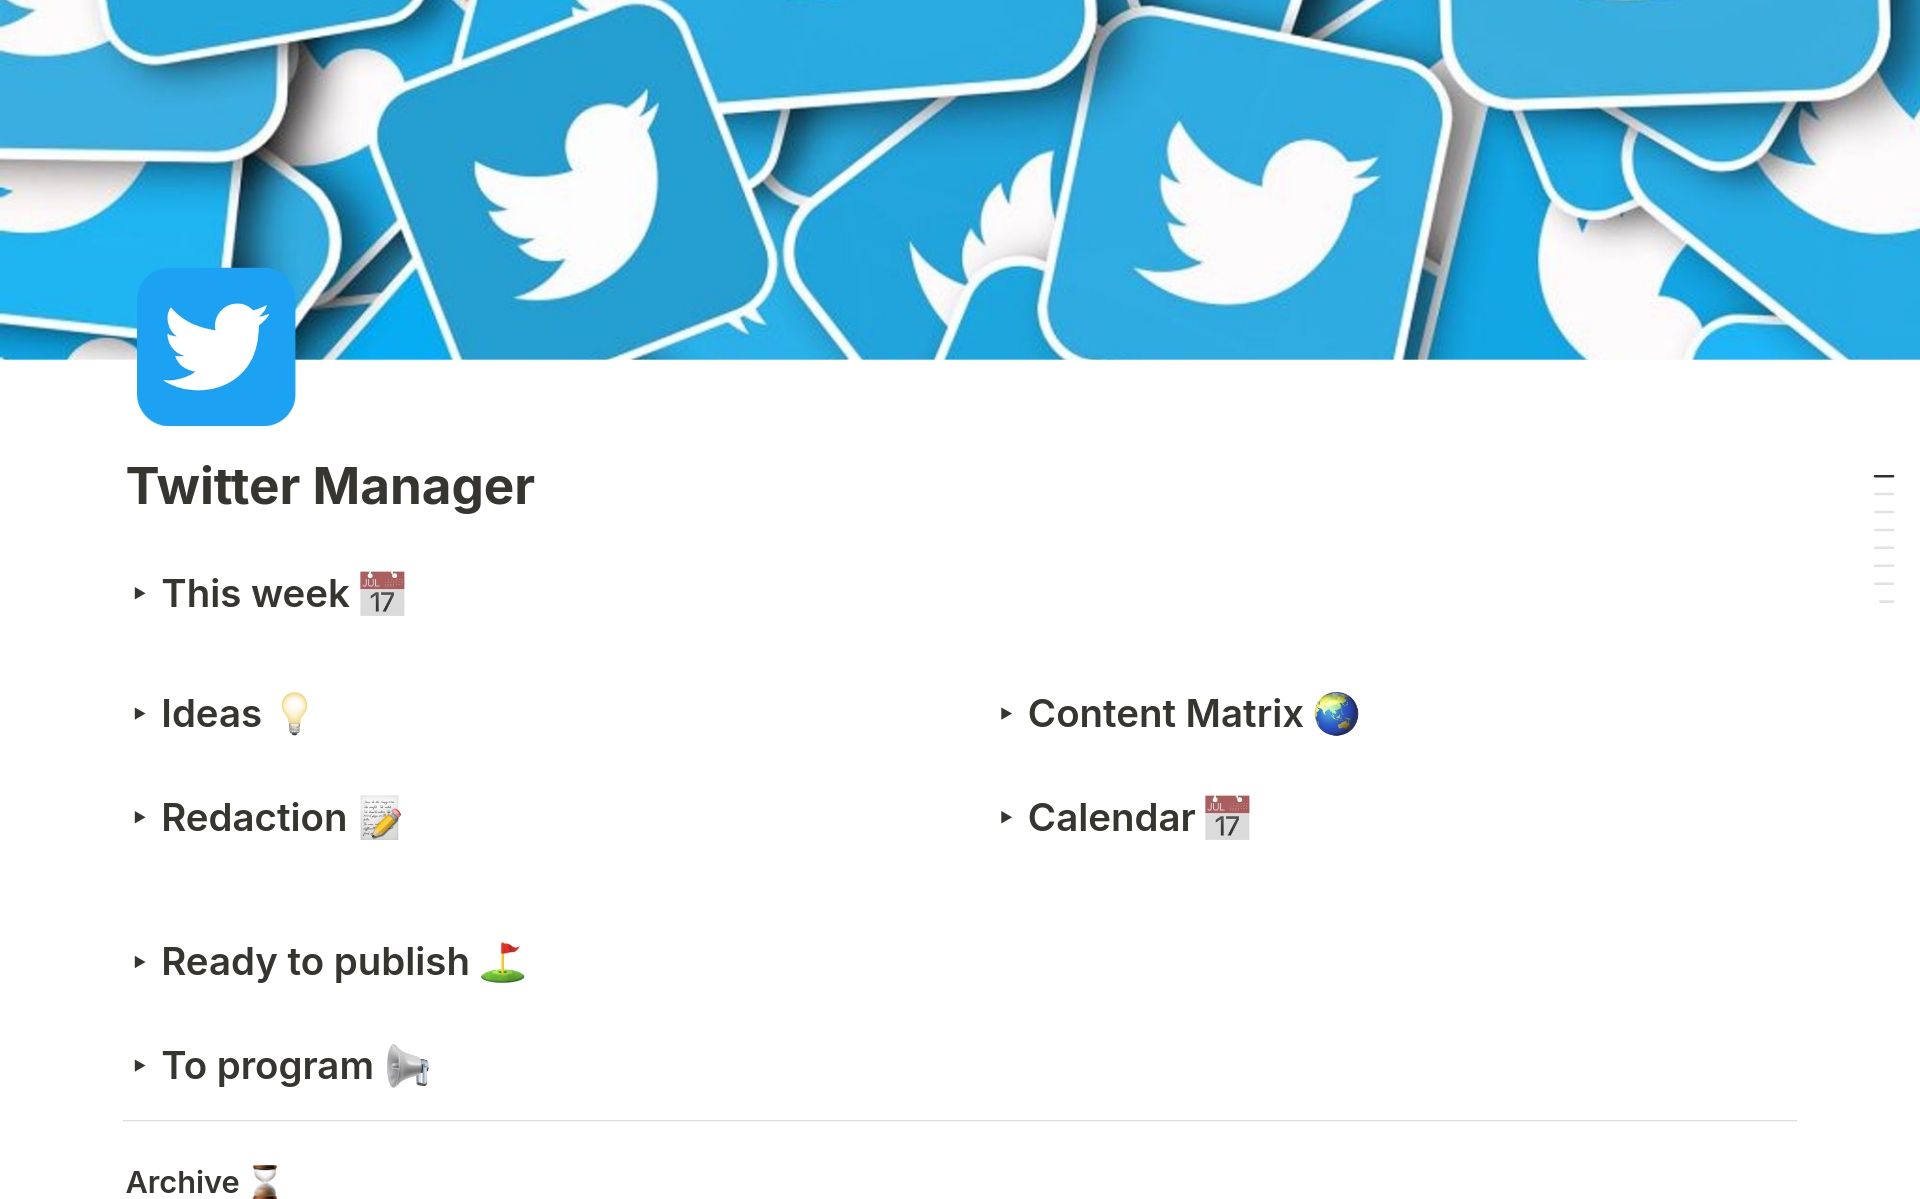 Vista previa de plantilla para Twitter Manager